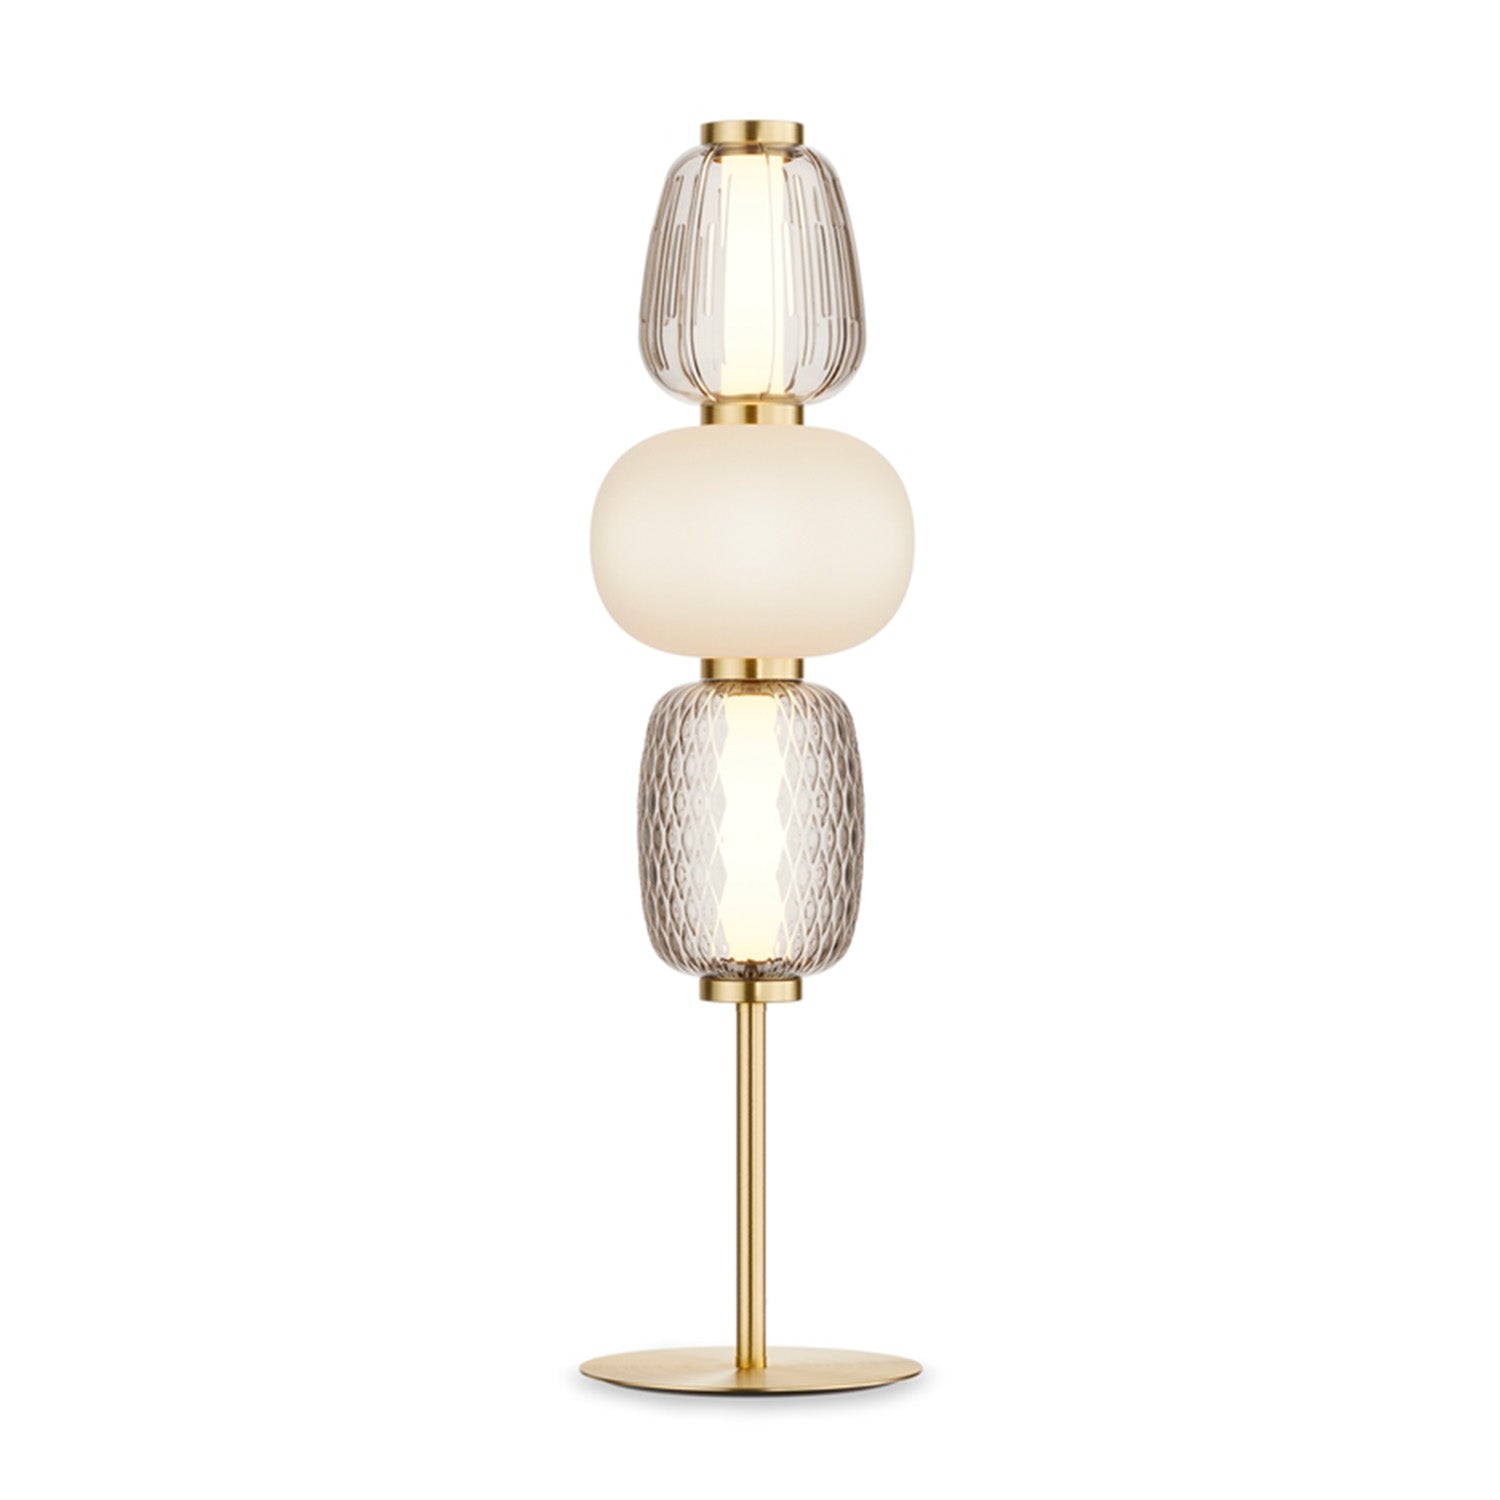 PATTERN - Art deco glass table lamp